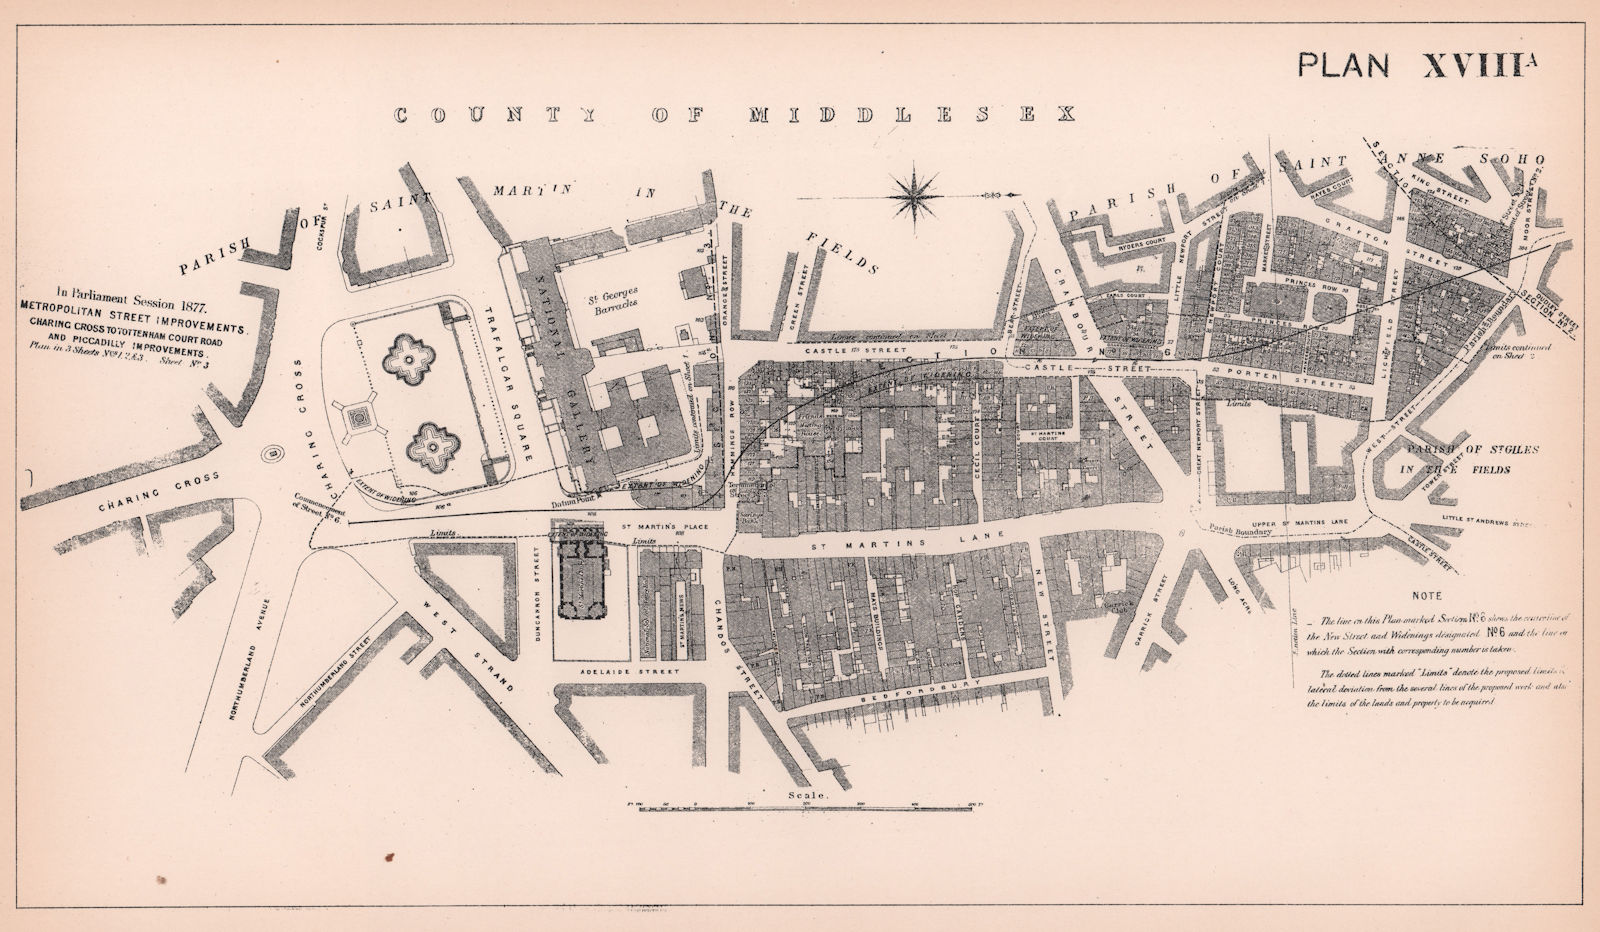 1877 Charing Cross Road development. Trafalgar Square-Shaftesbury Ave. 1898 map